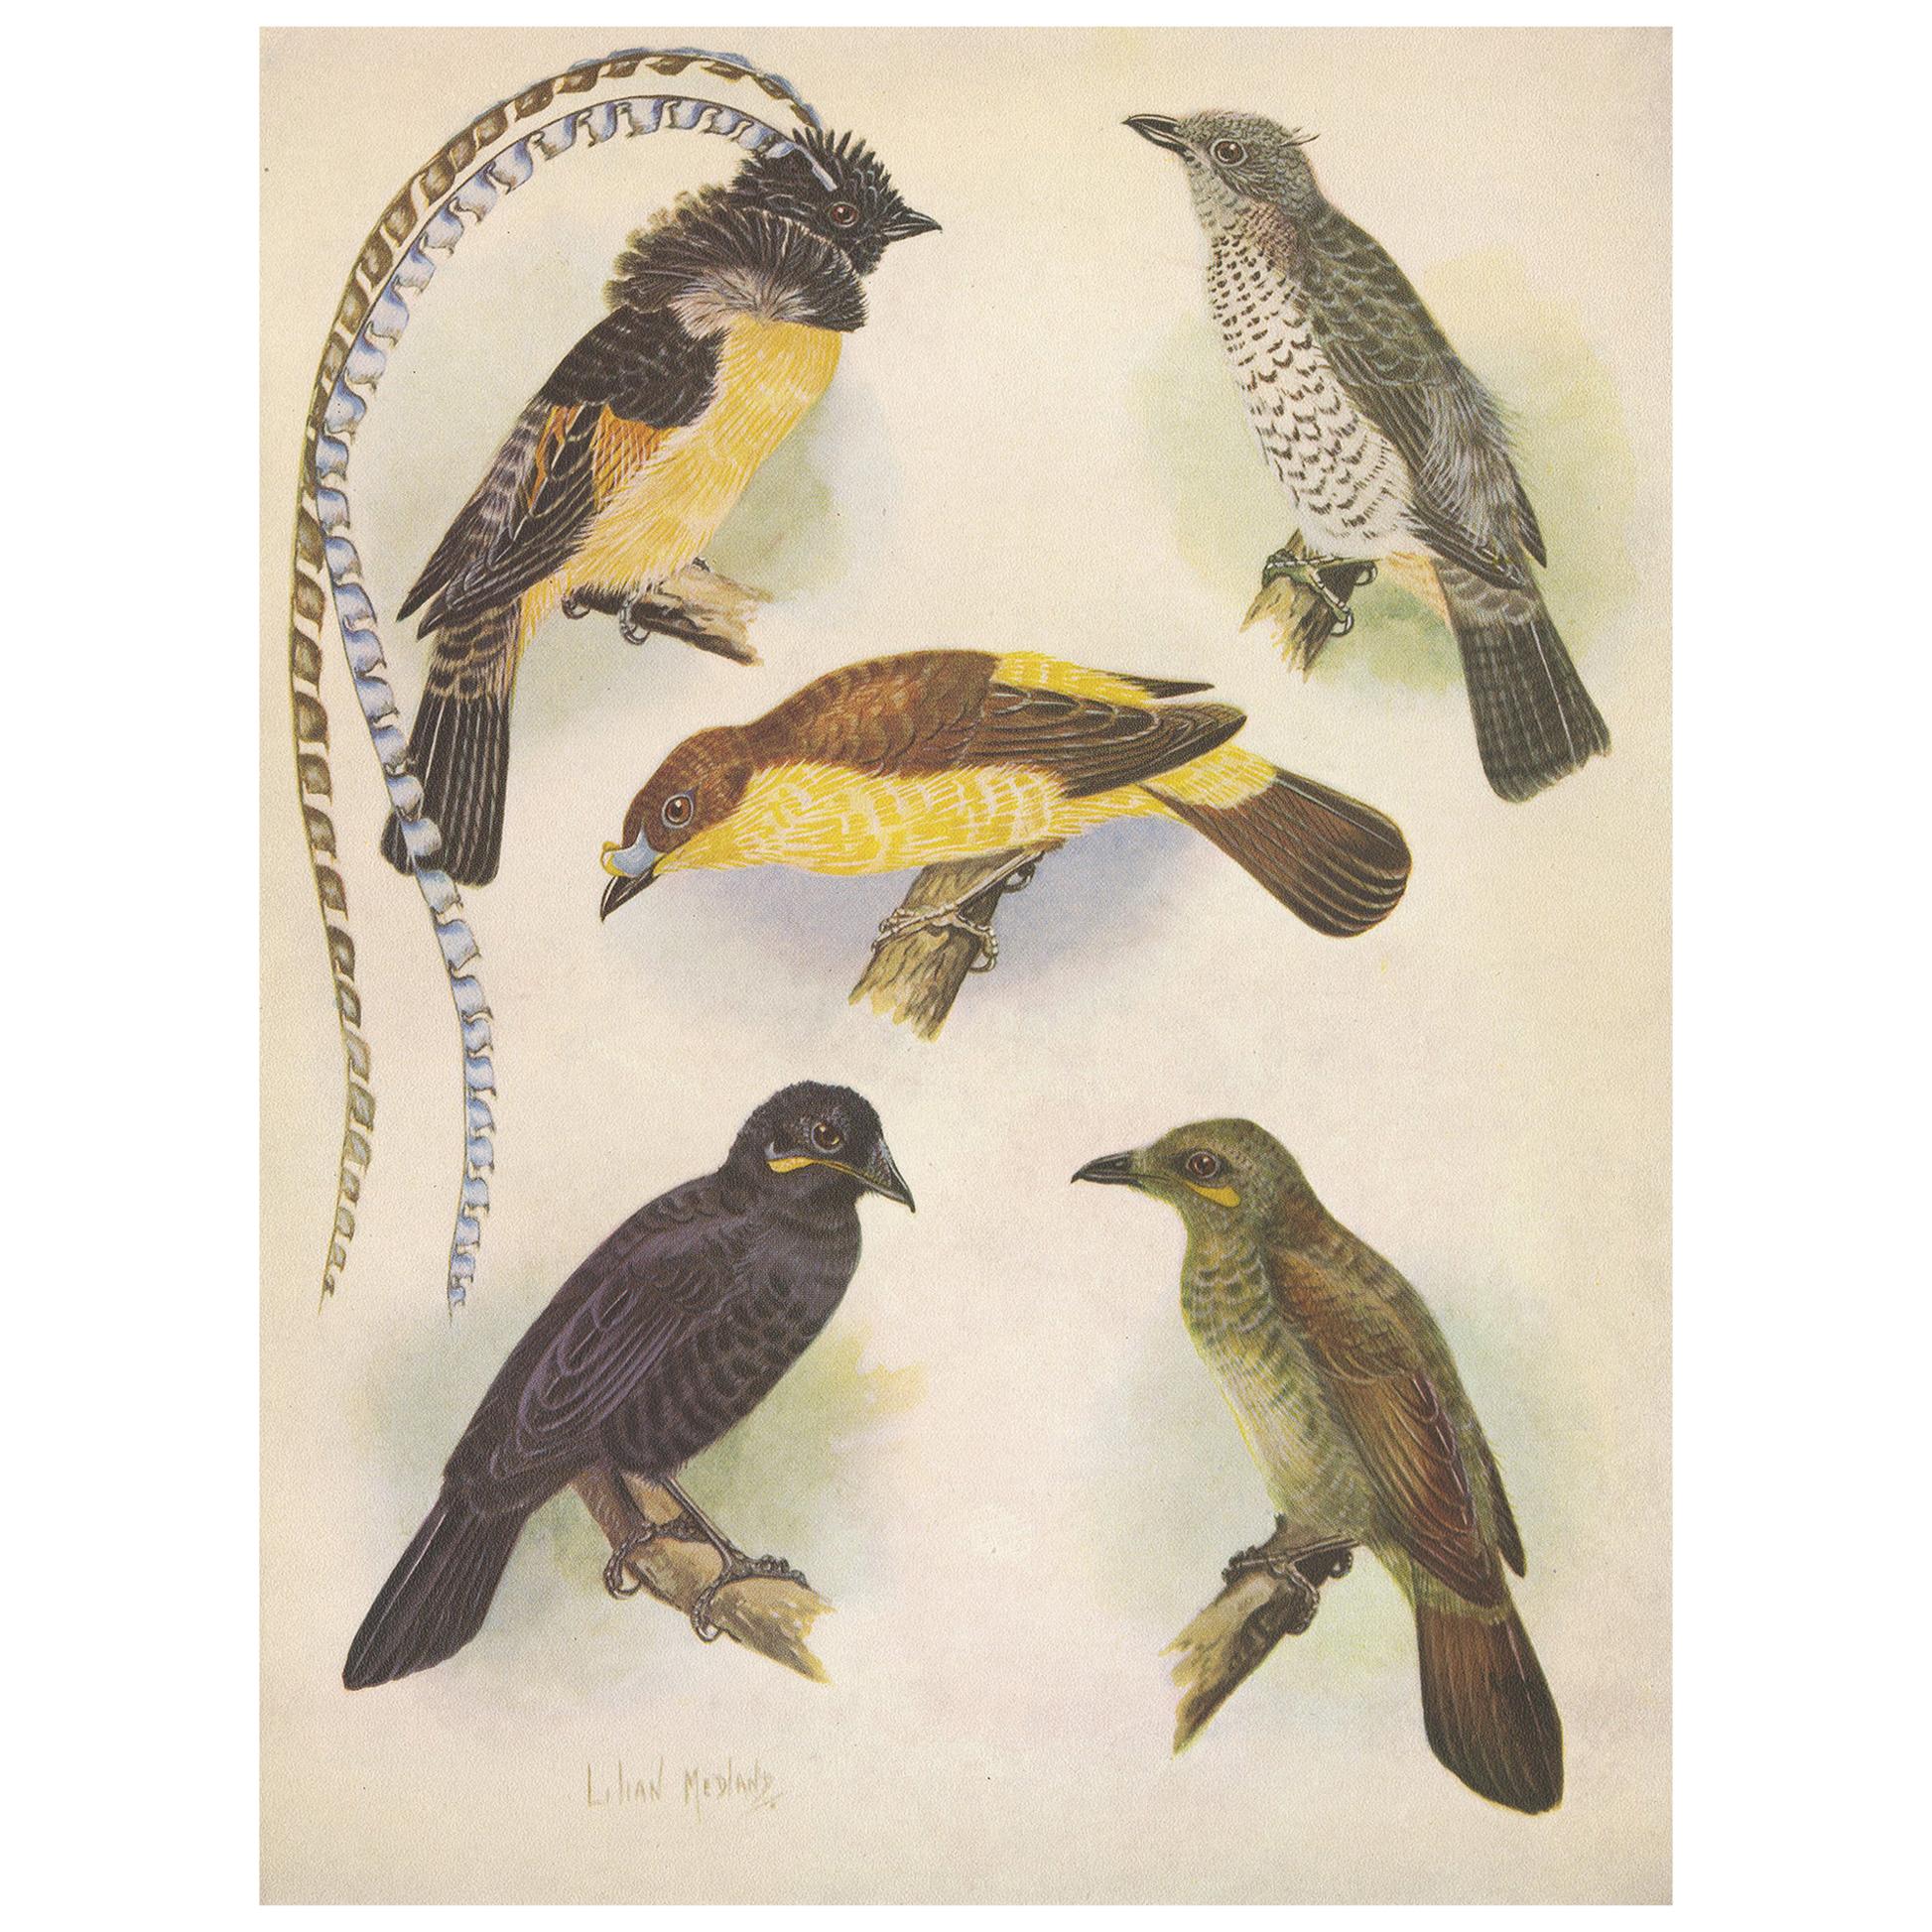 Antique Print of the Enameled Bird, Shield-Bill & Loria's Bird, 1950